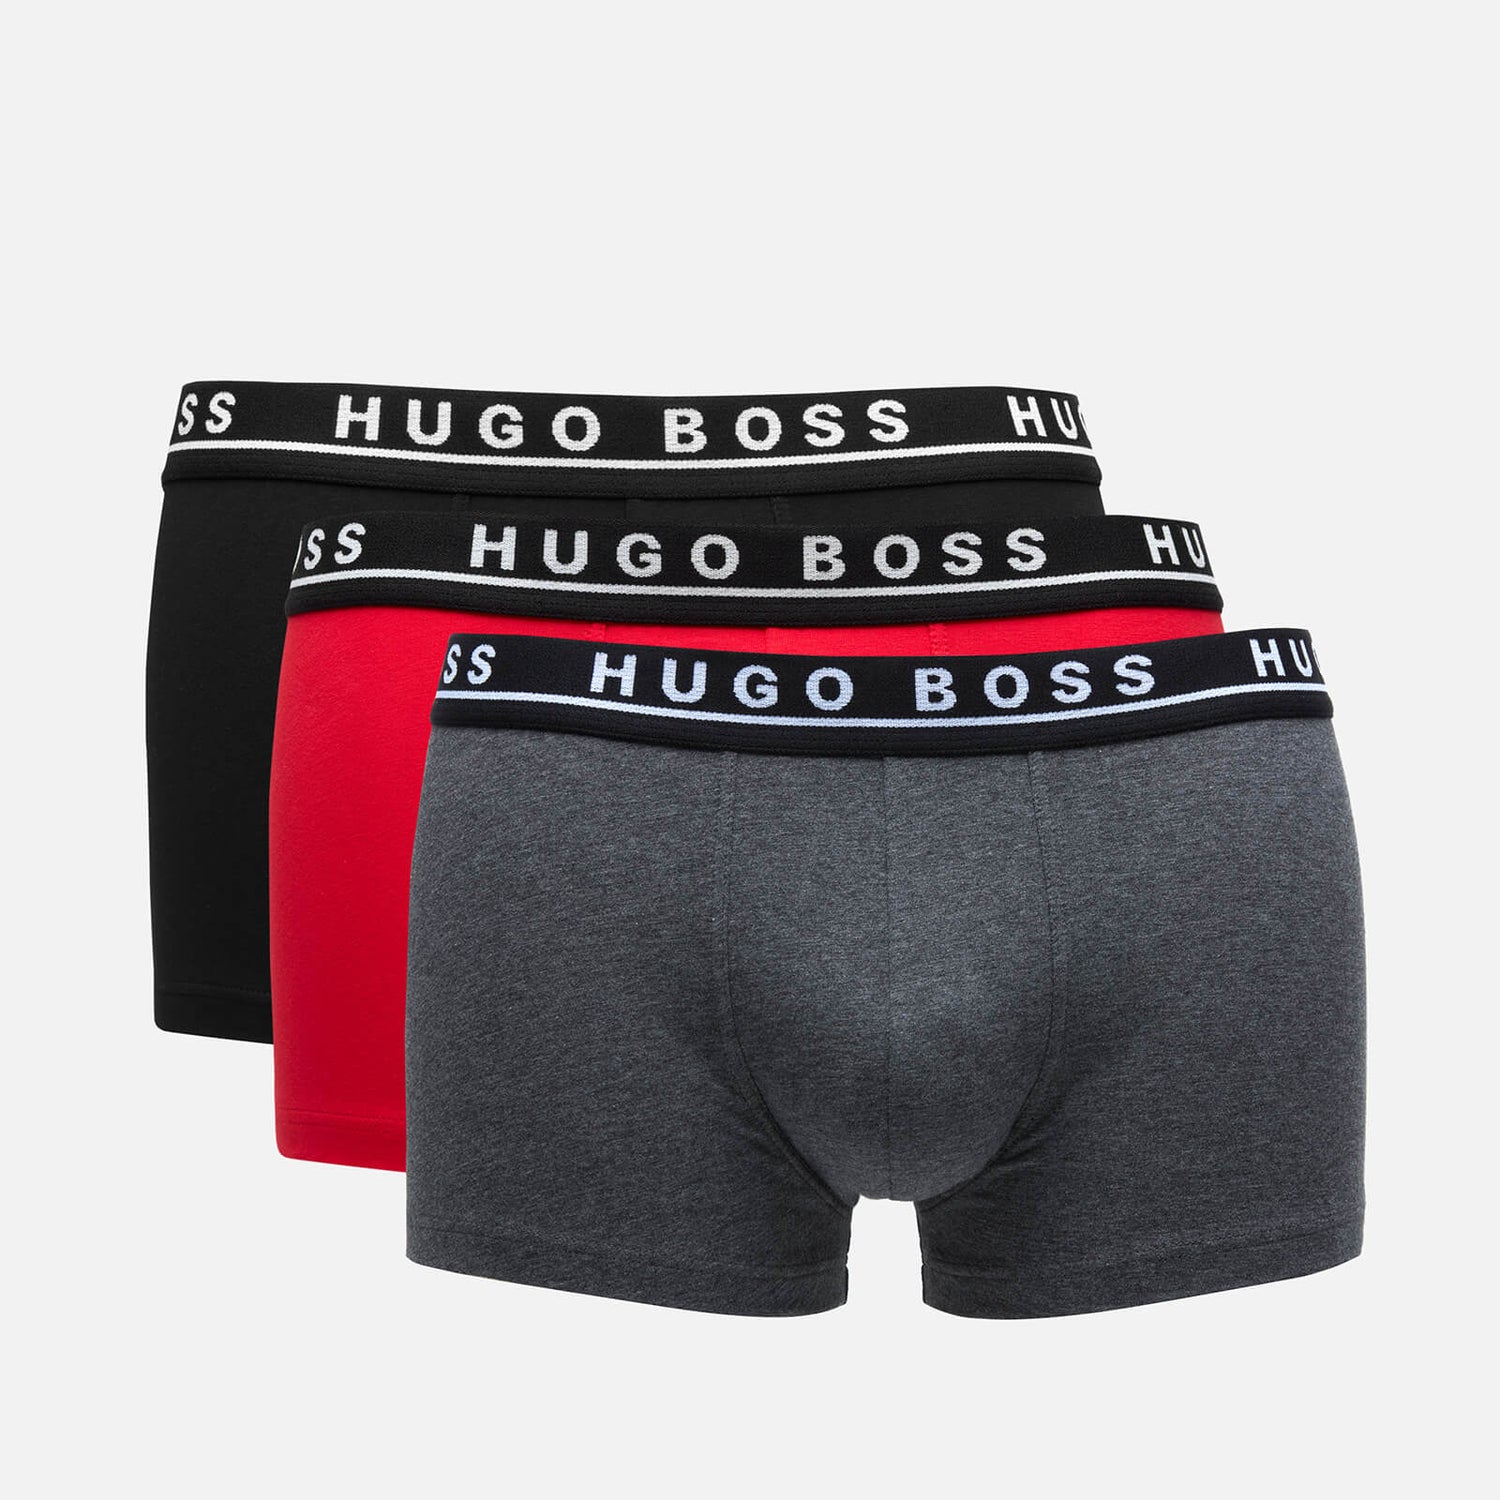 BOSS Bodywear Men's Boxer Shorts Triple Pack - Grey Melange/Red/Black